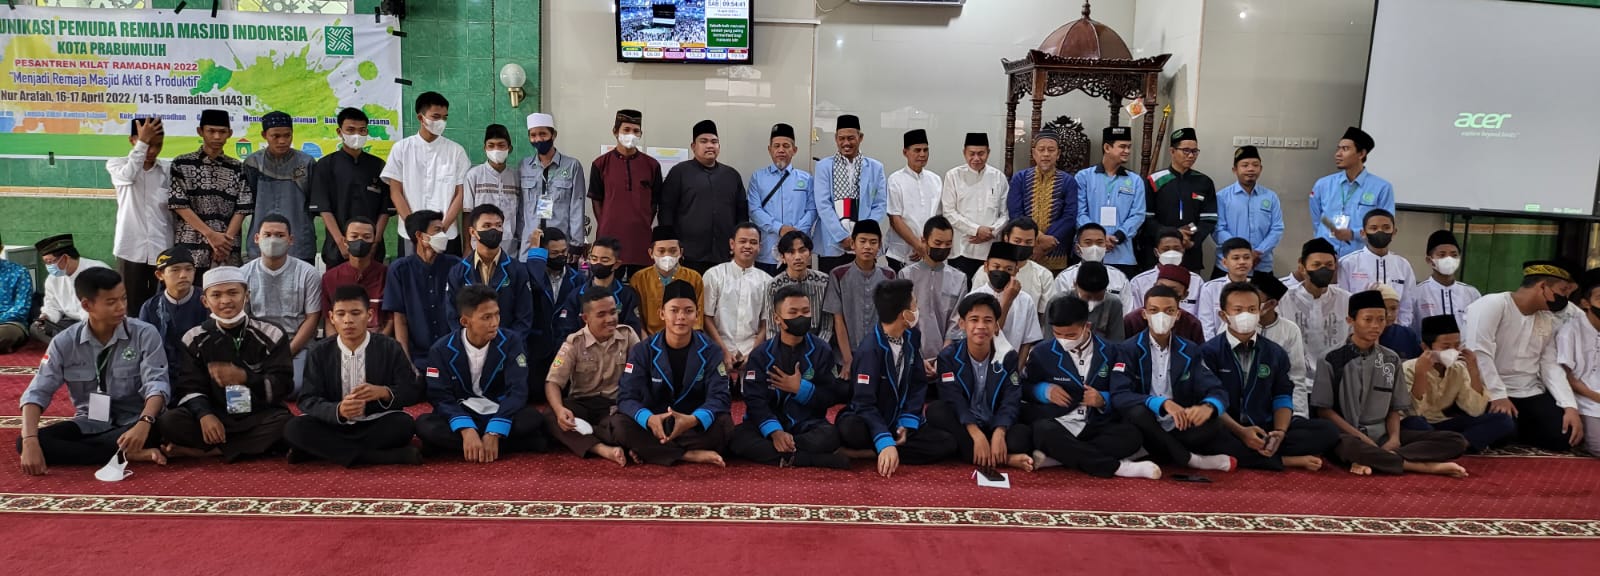 Cetak Remaja Masjid Produktif dan Aktif